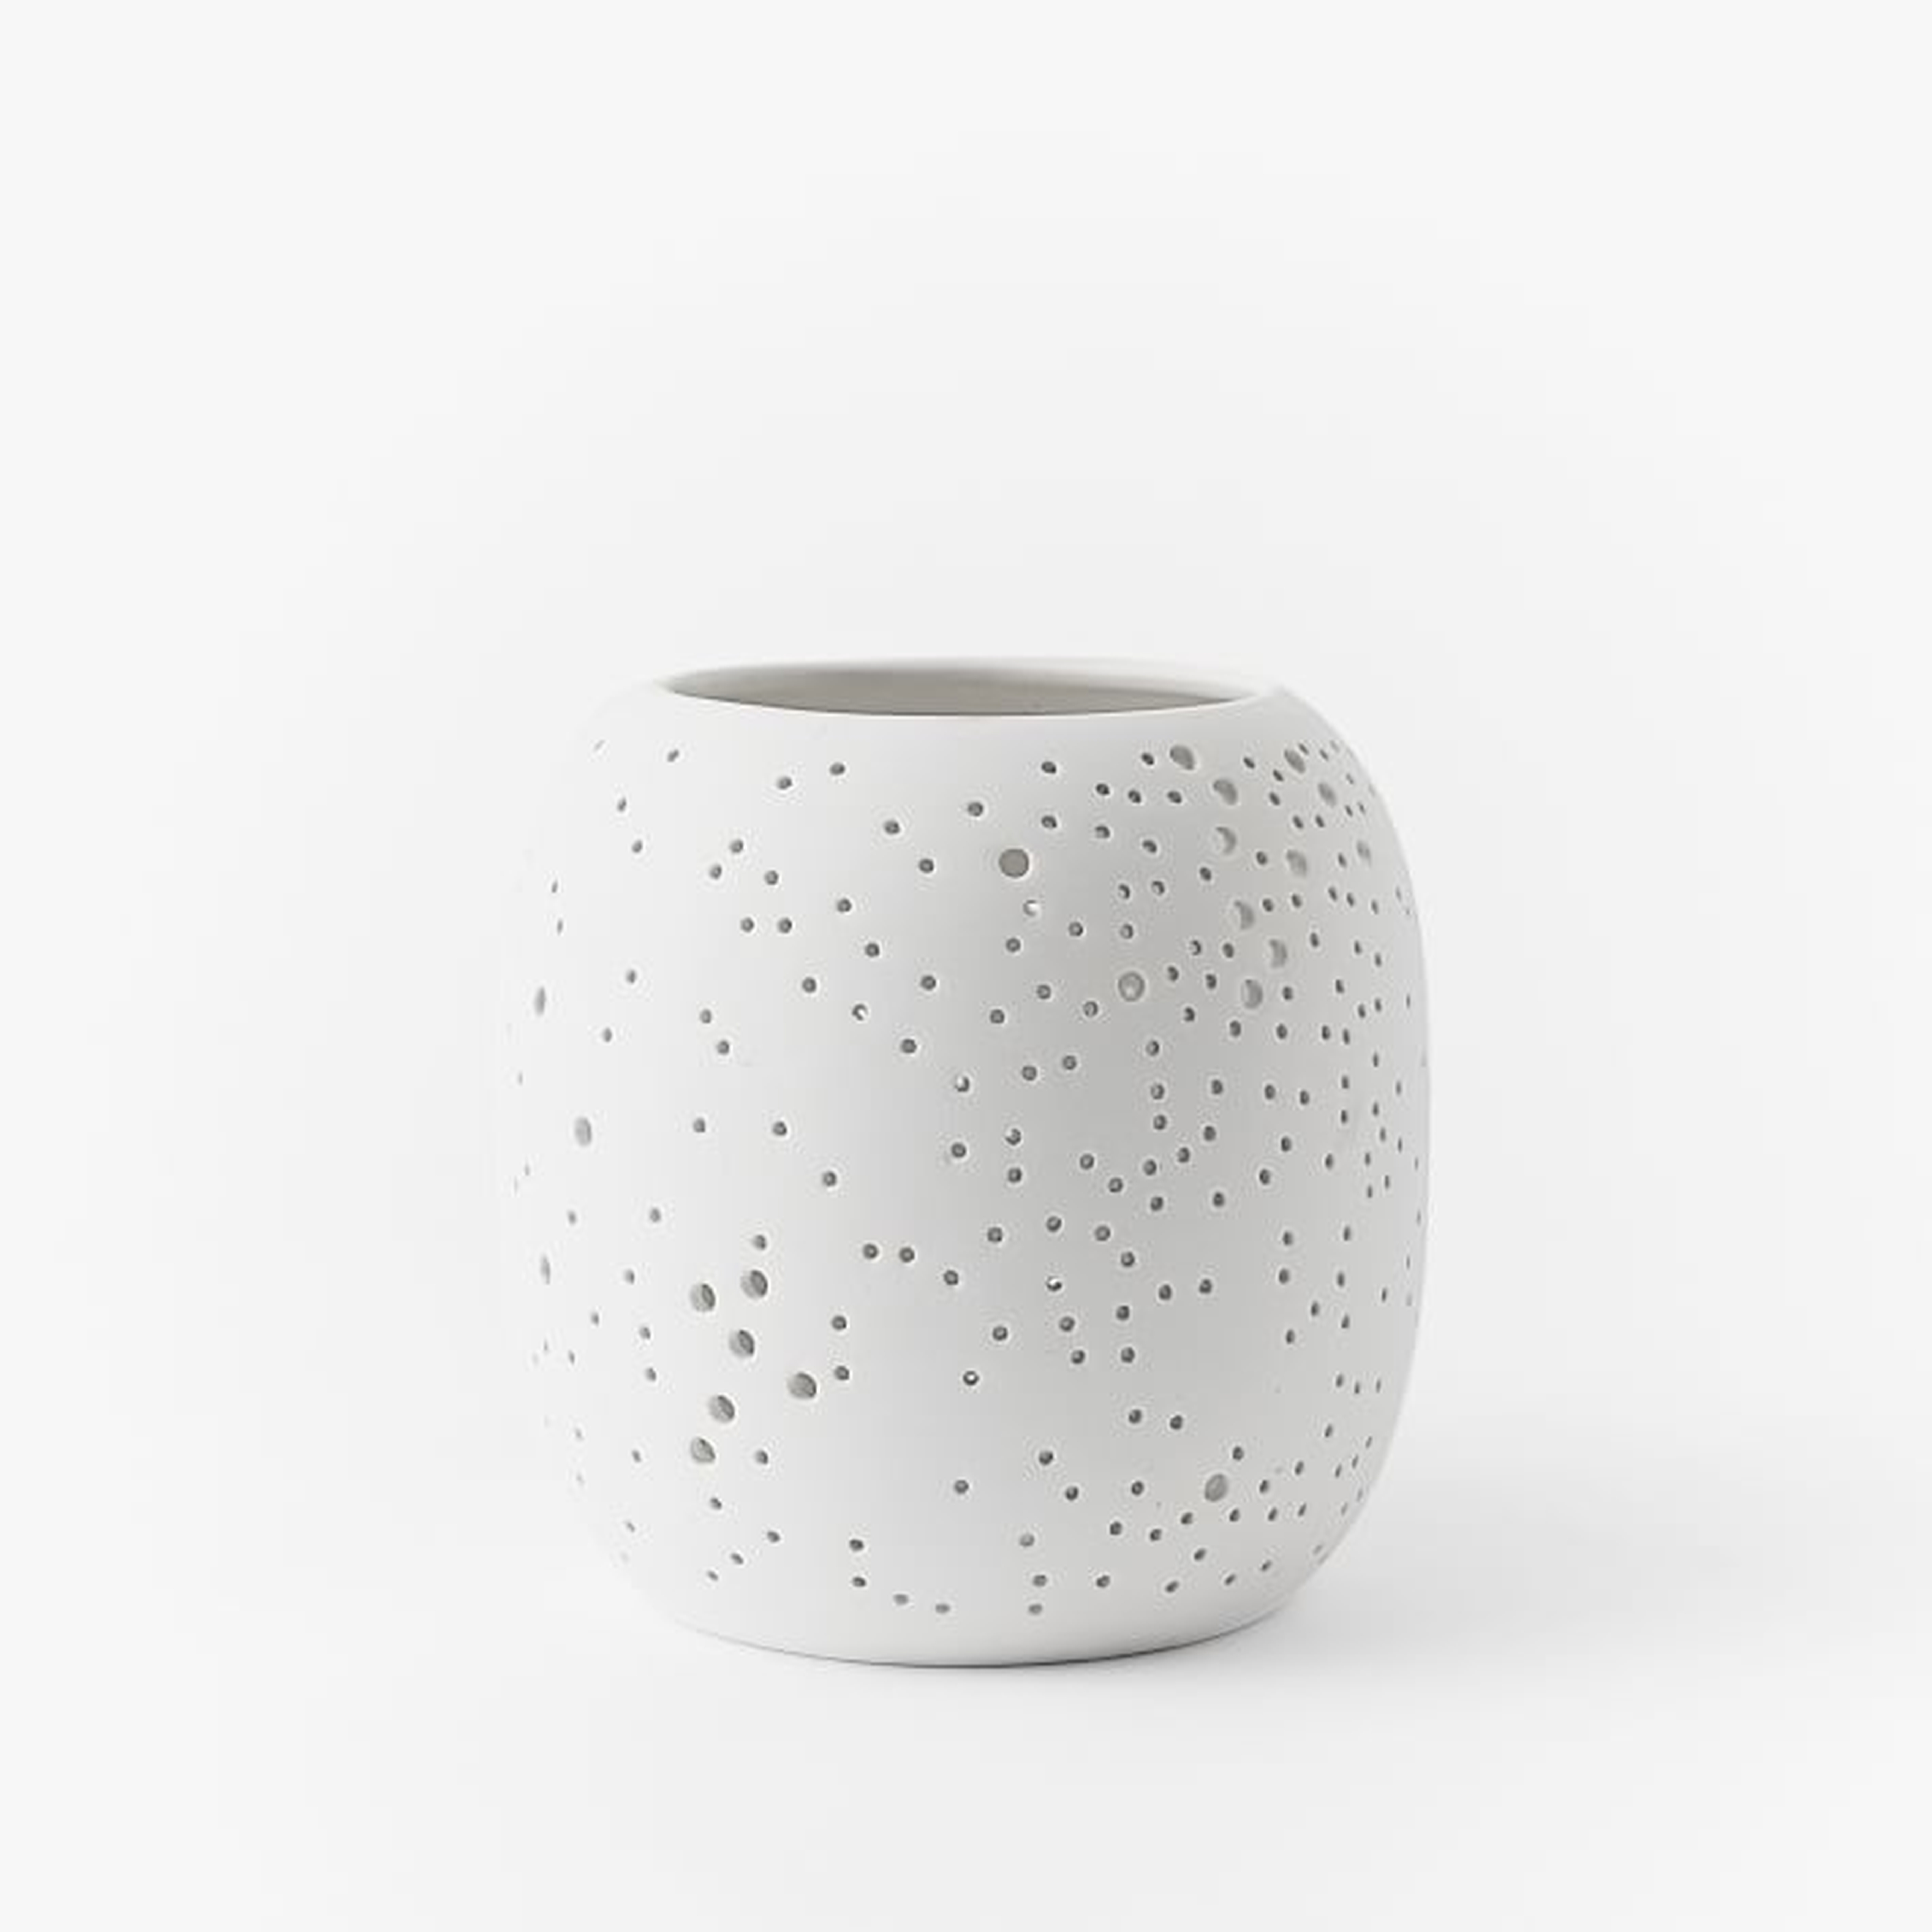 Pierced Porcelain Hurricanes + Vases - Constellation Small - West Elm